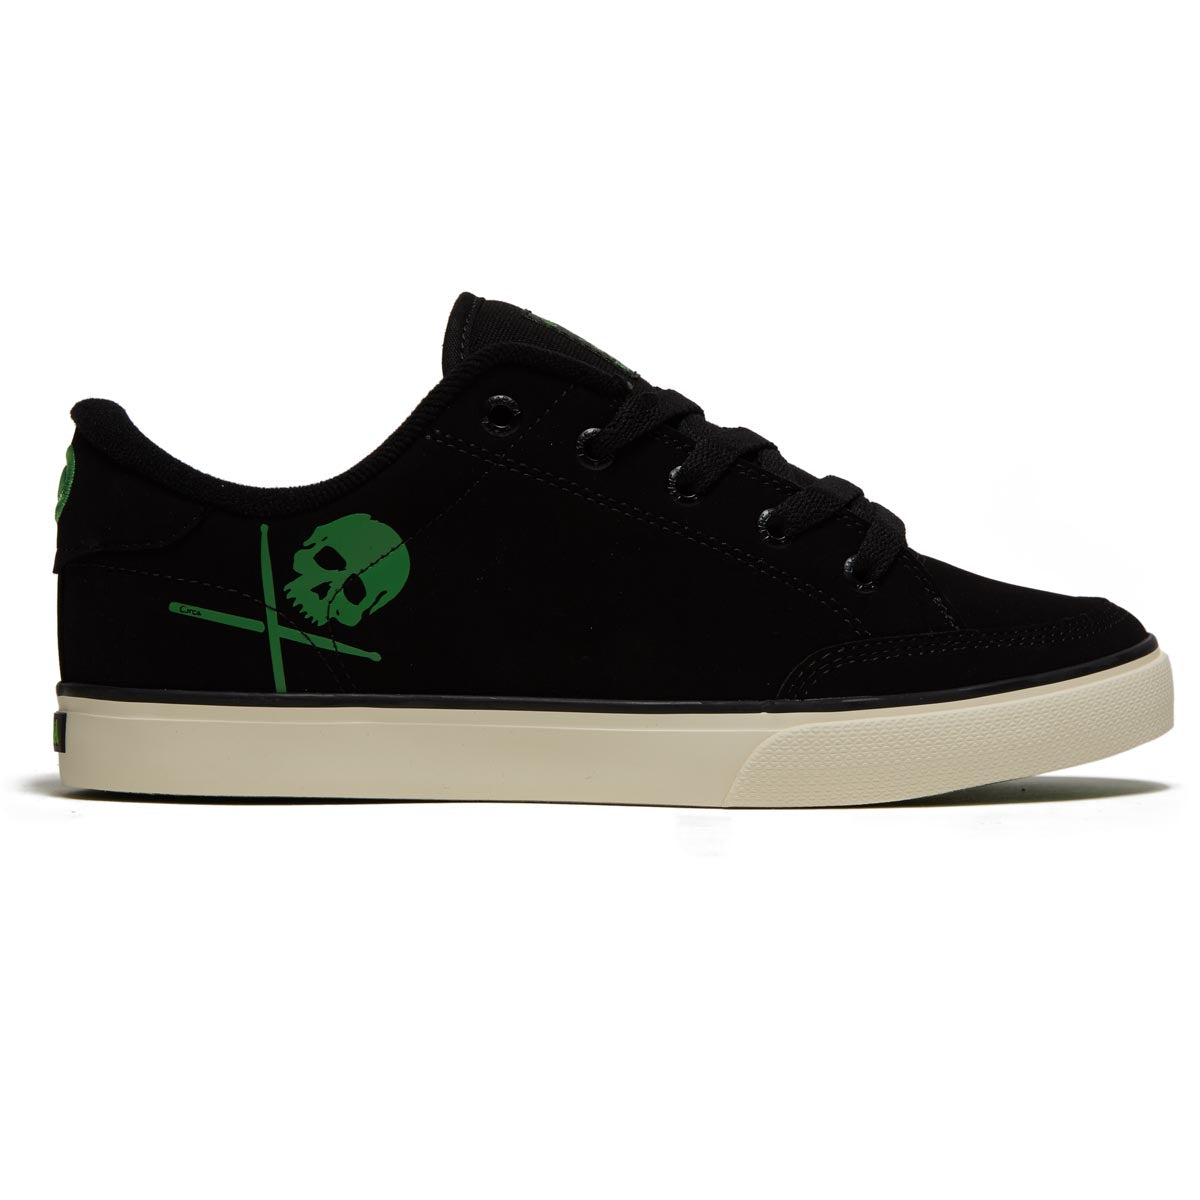 C1rca Buckler Sk Shoes - Black/Fluo Green image 1